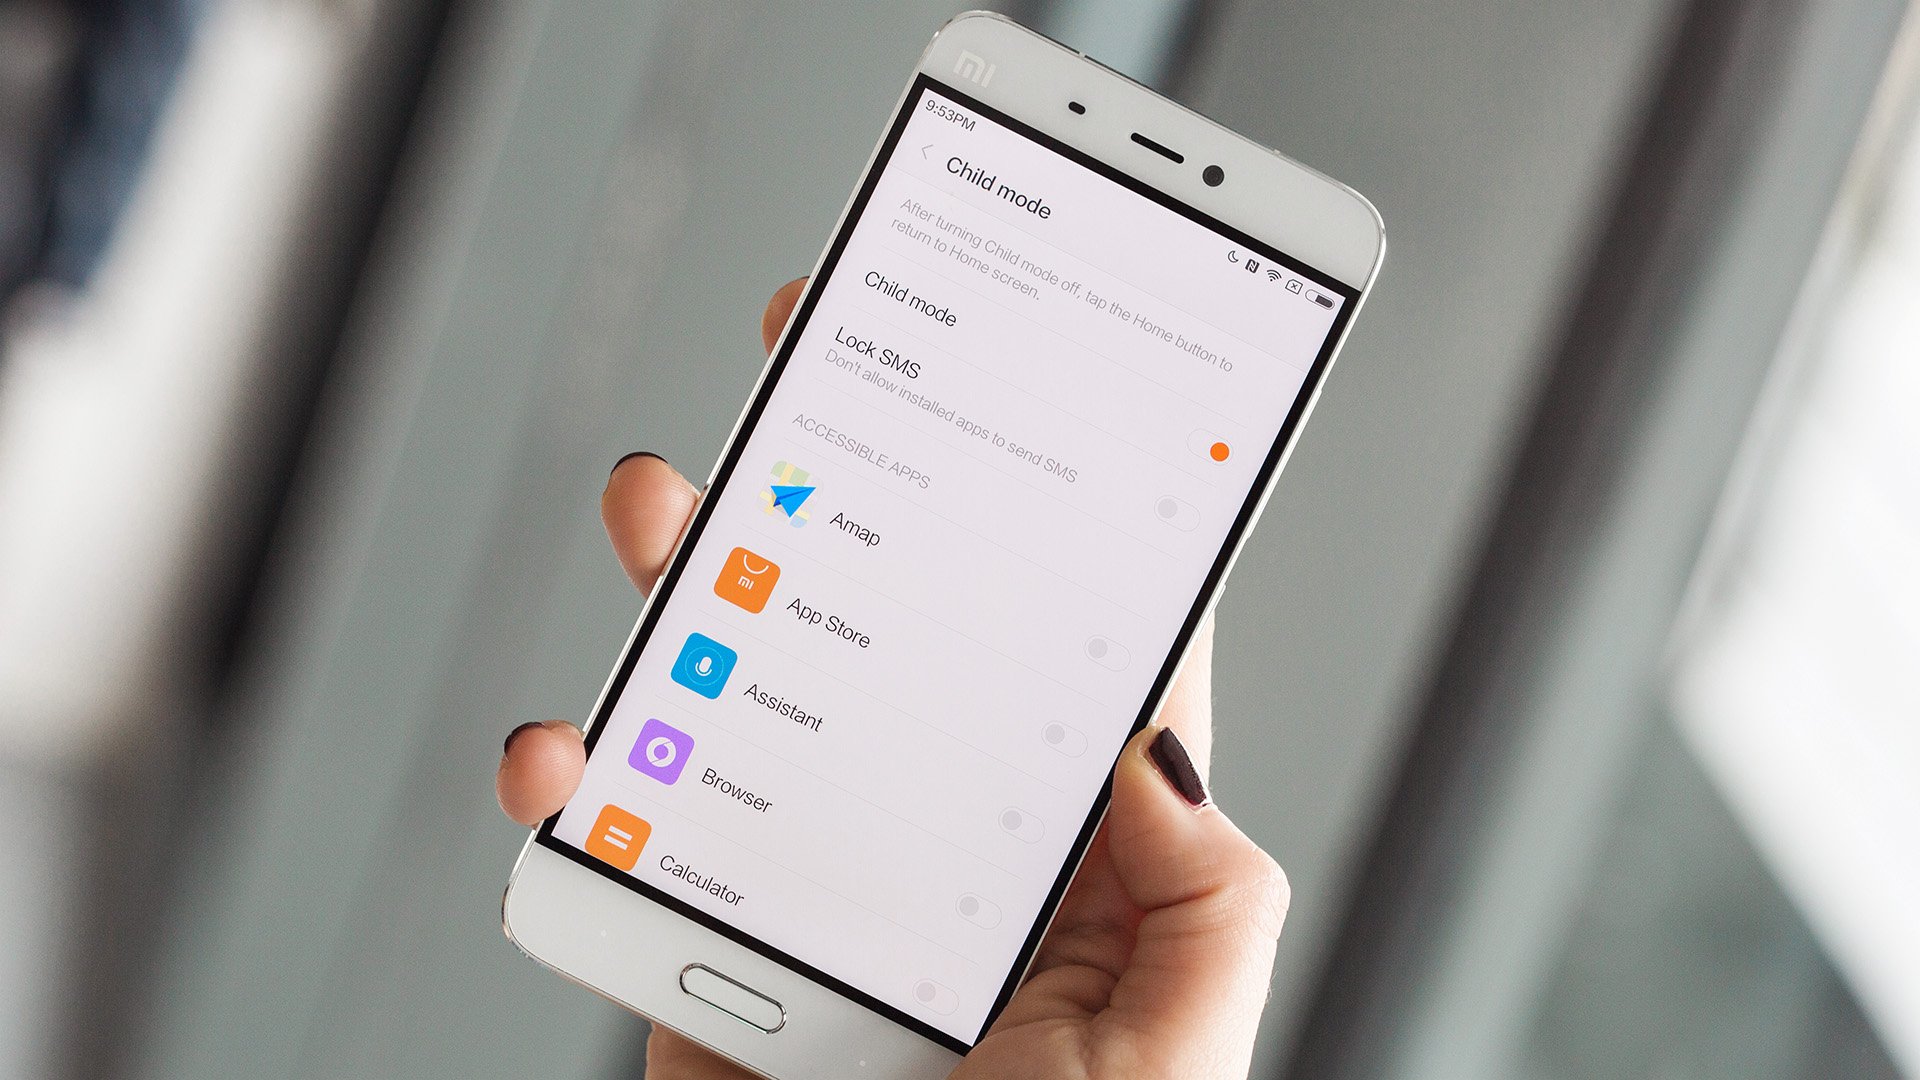 Xiaomi Посторонние Звуки